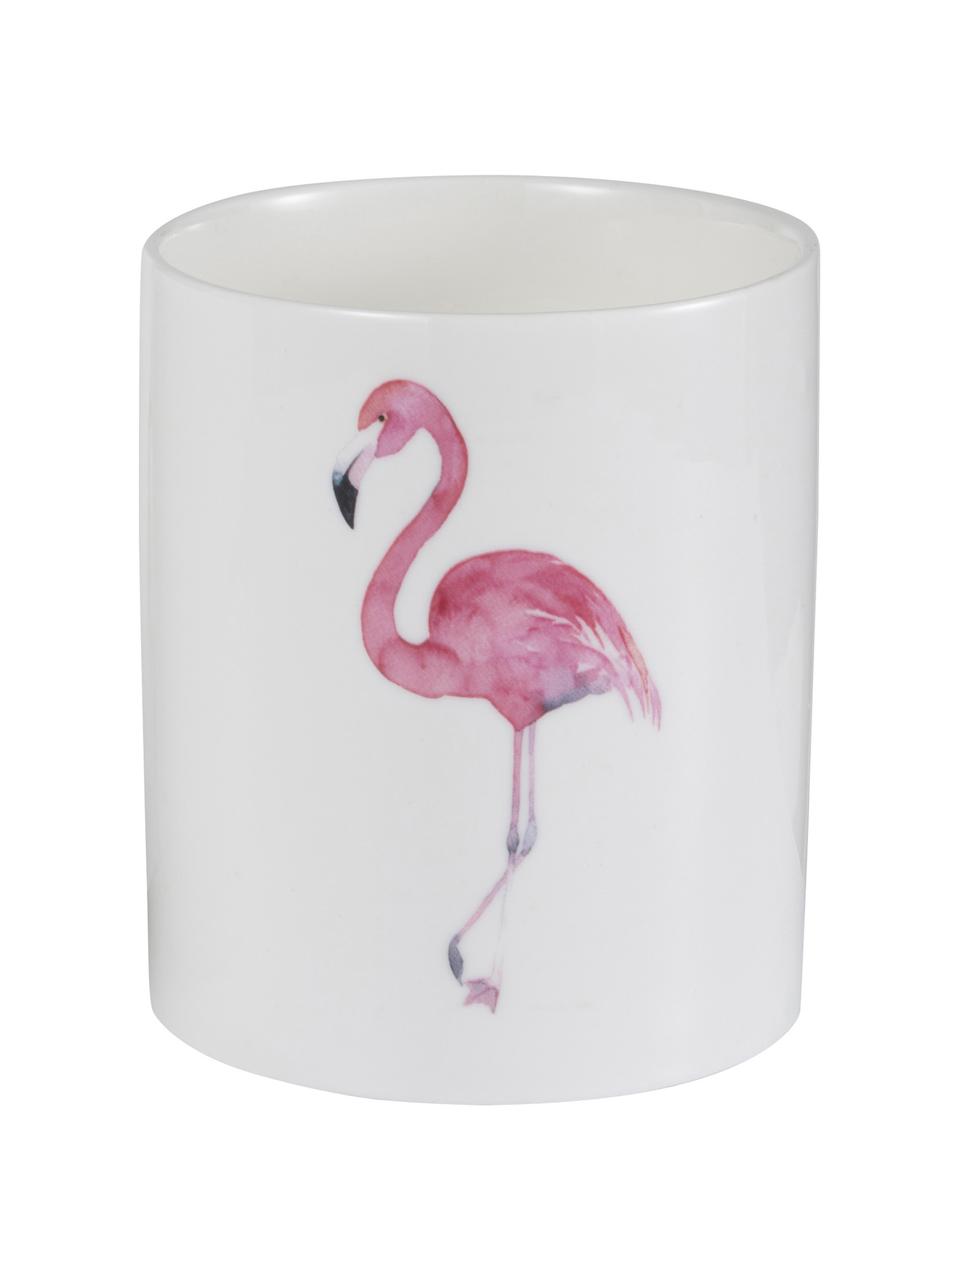 Geurkaars Flamingo, Houder: keramiek, Wit, roze, Ø 11 x H 13 cm